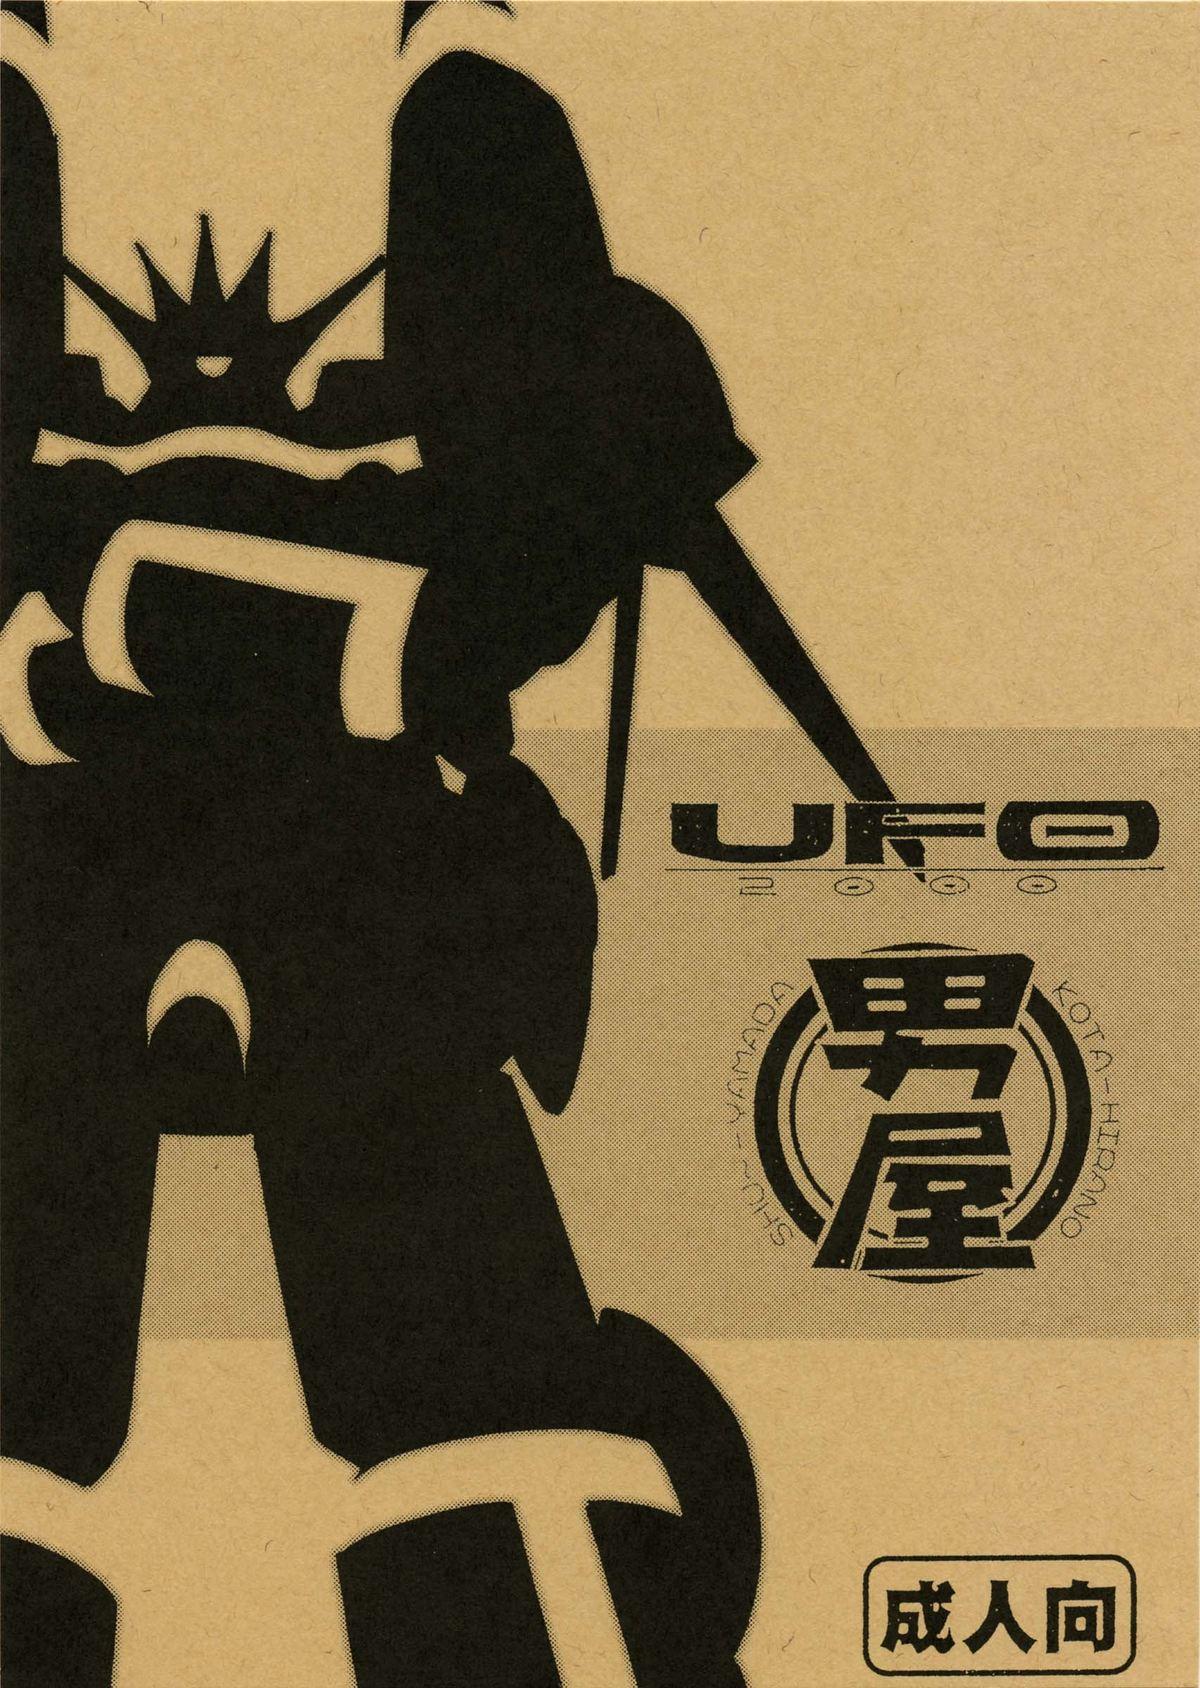 UFO 2000 UFO-TOP 0